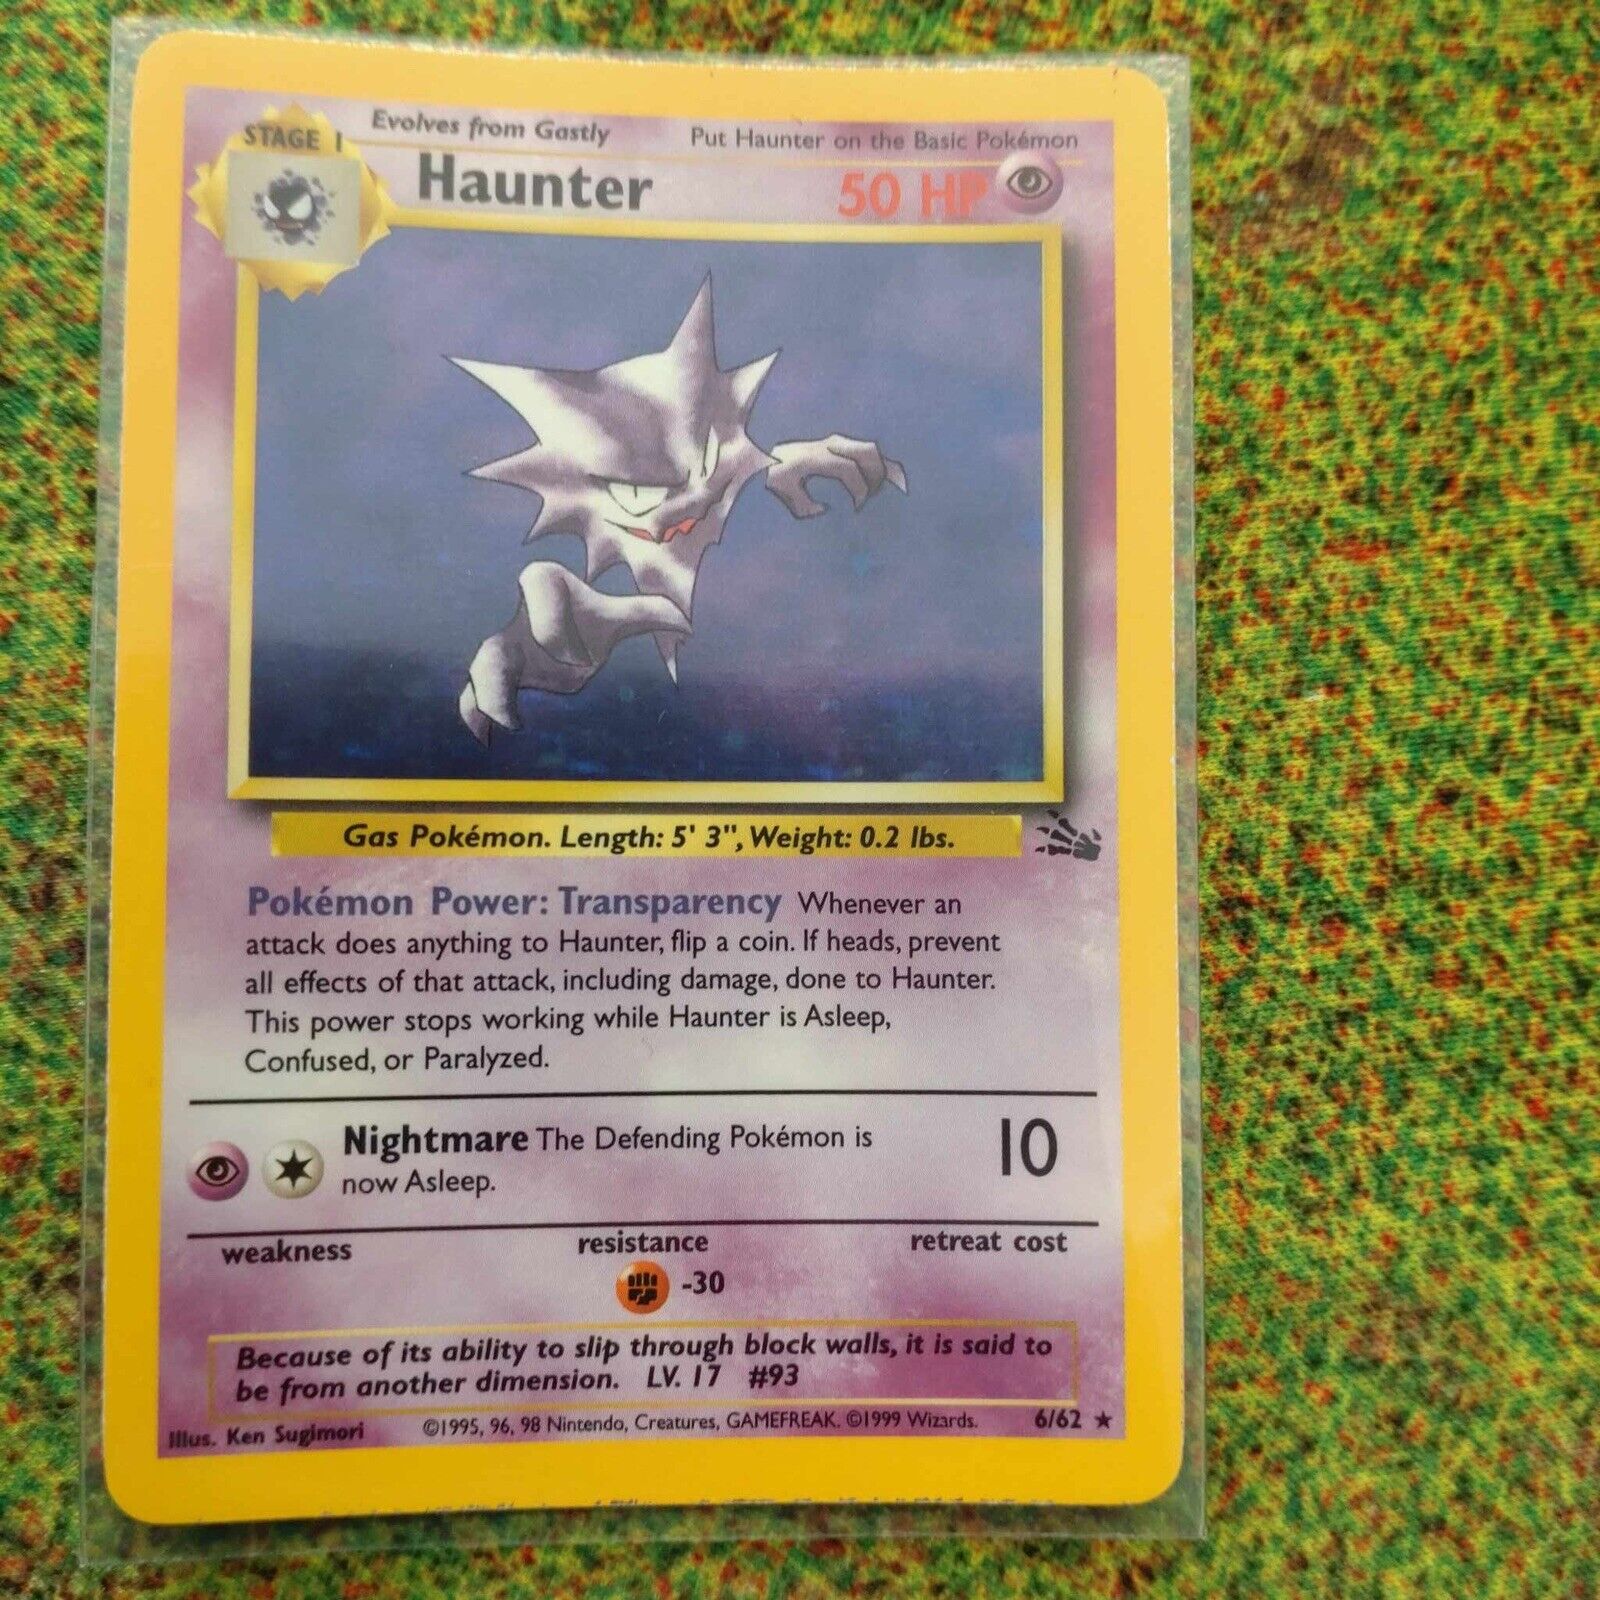 Pokémon Trading Cards Fossil Set Haunter Mint / Near Mint 6/62